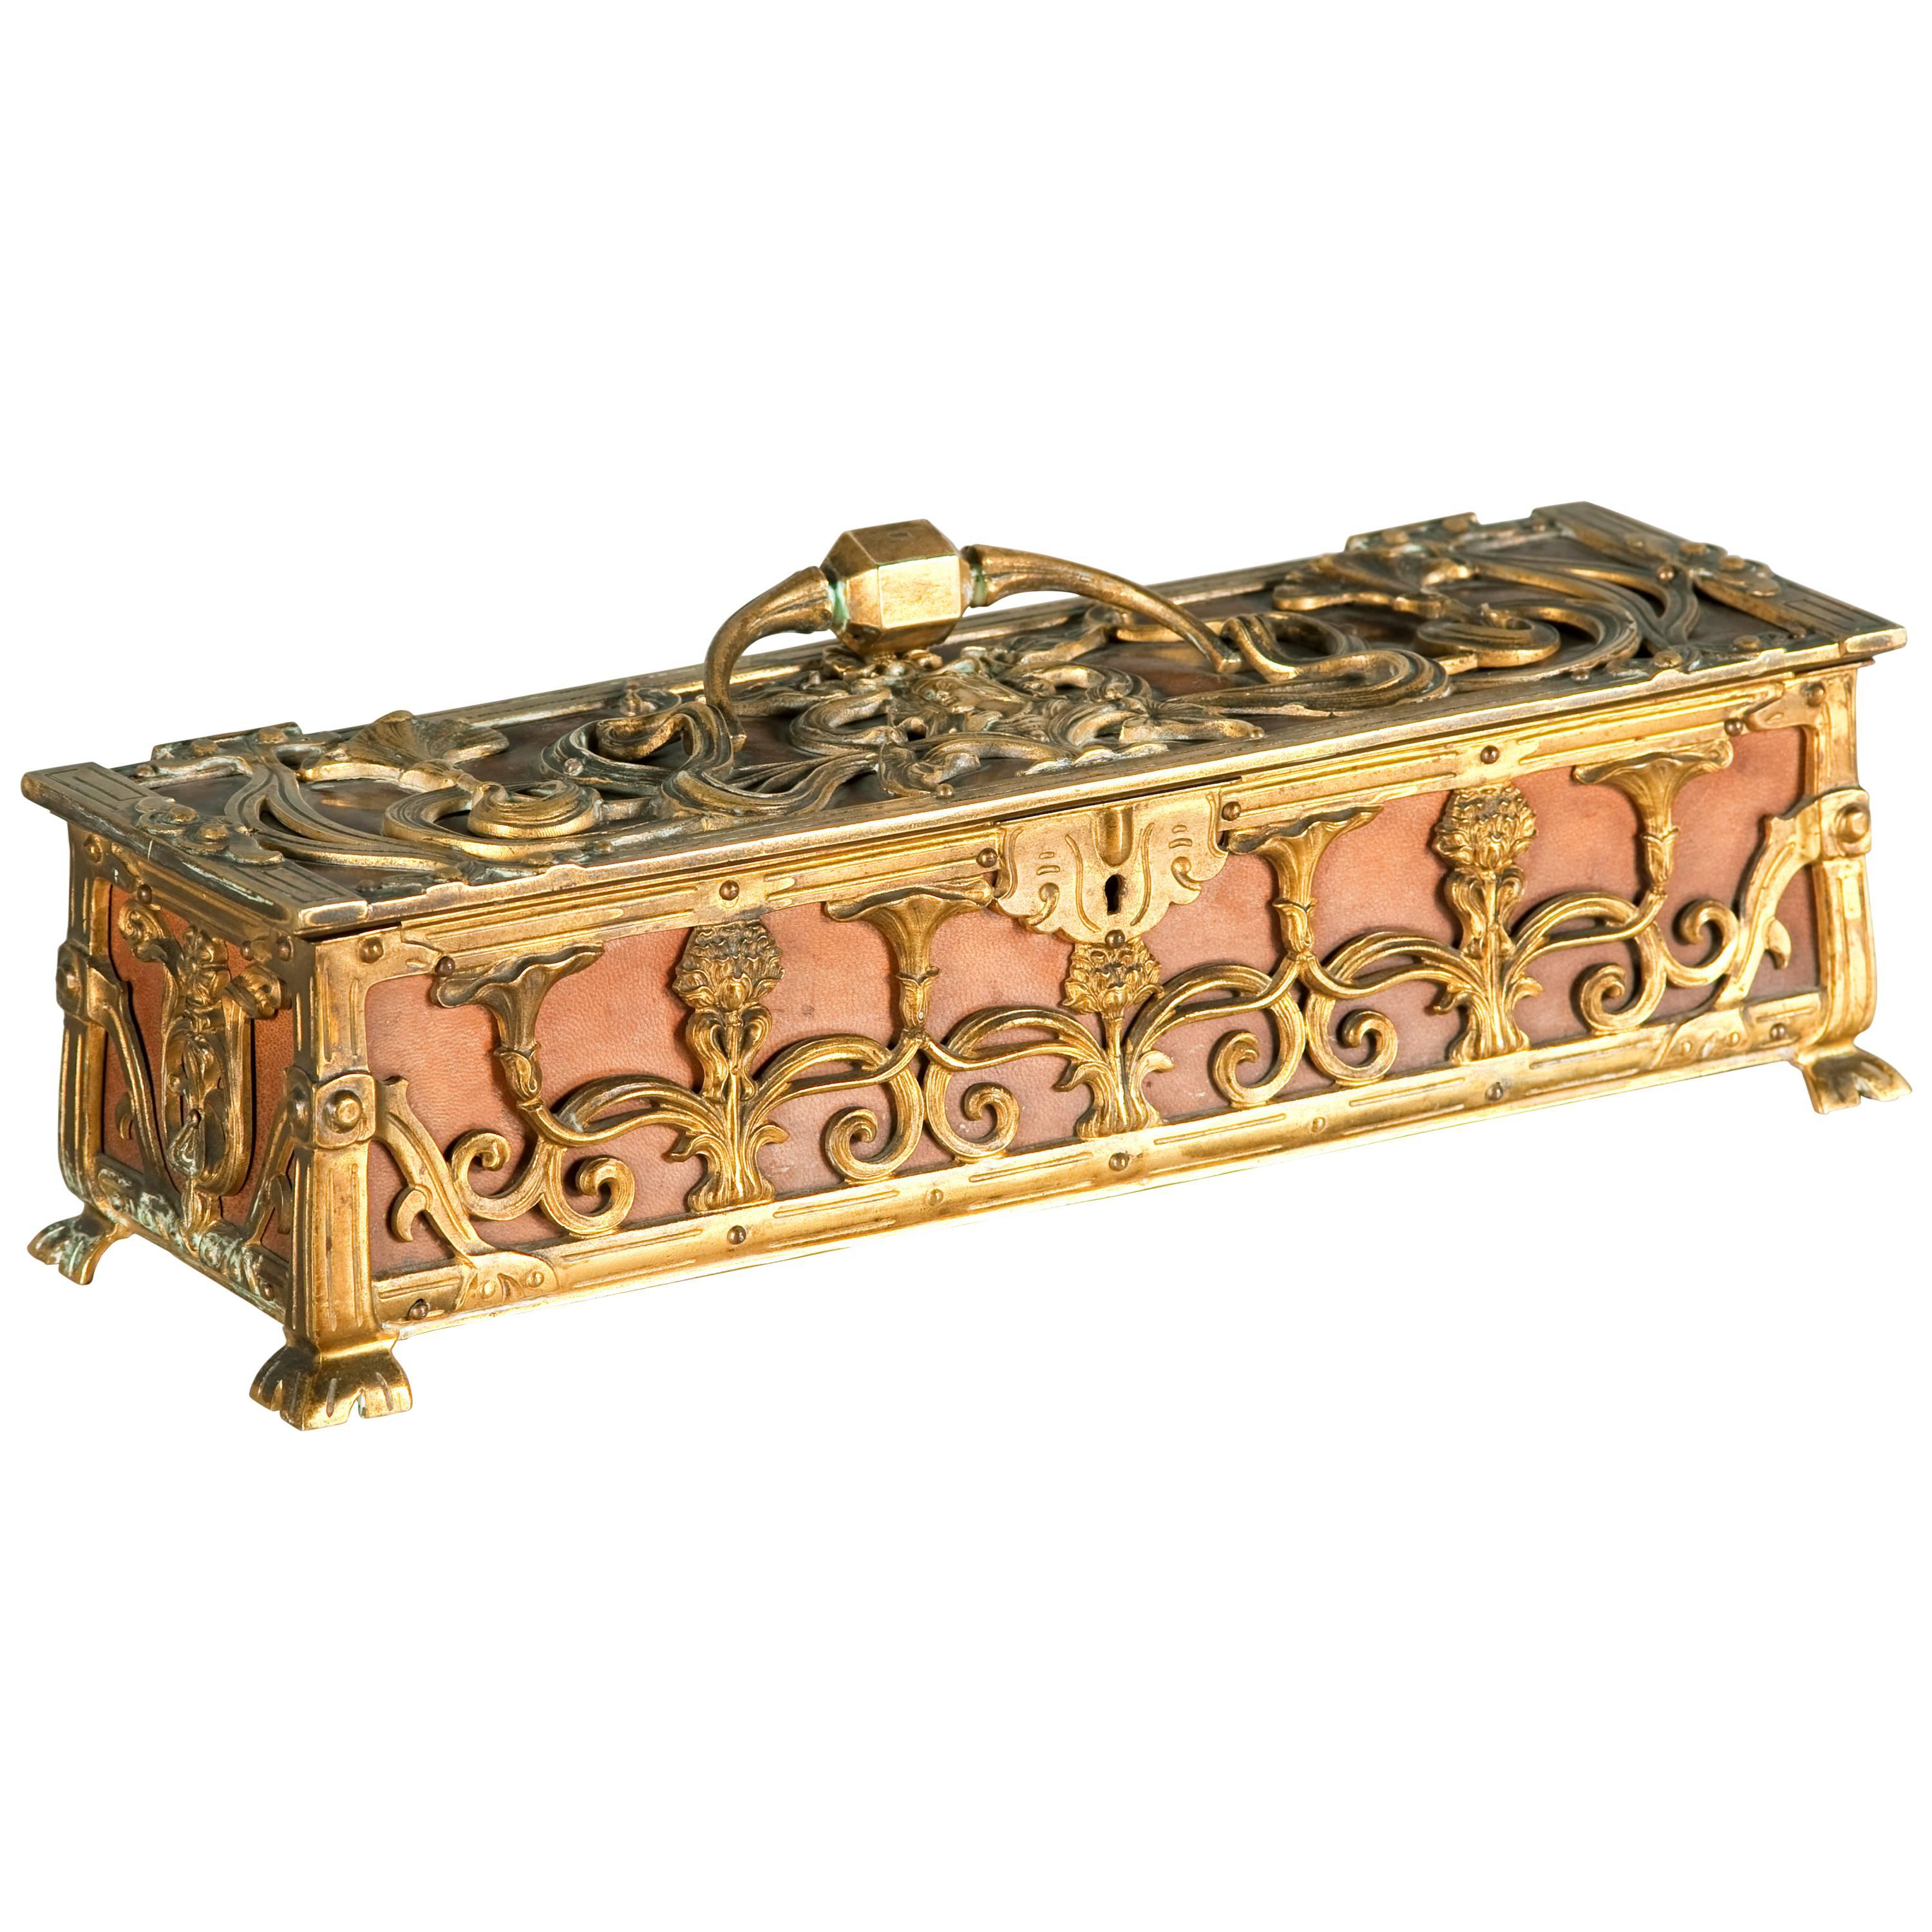 Precious Bronze and Parchment Jewelry Box